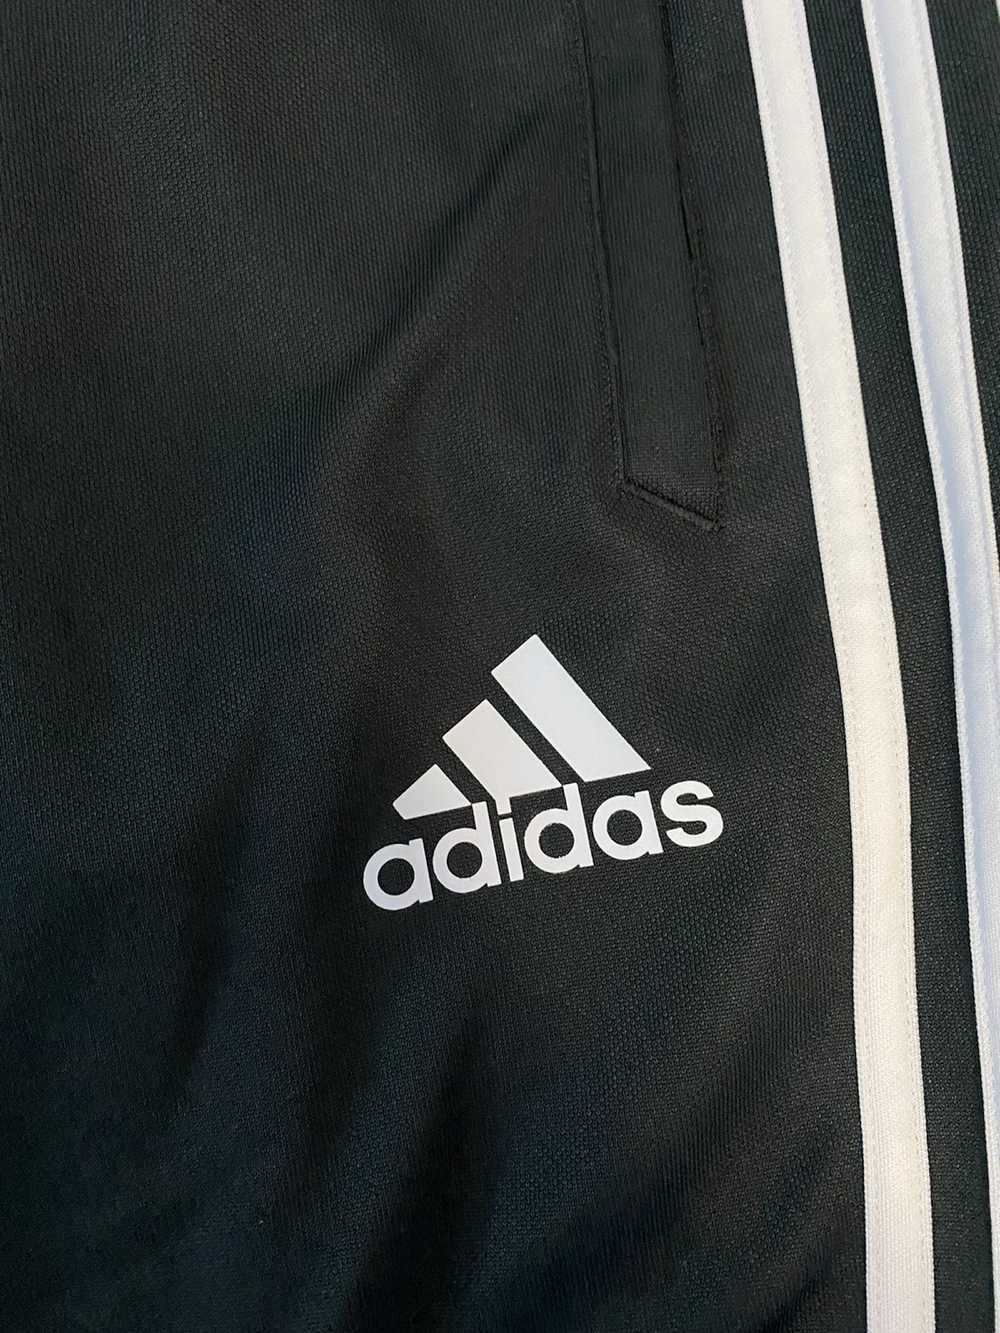 Adidas Adidas Grey Trackpants - image 3